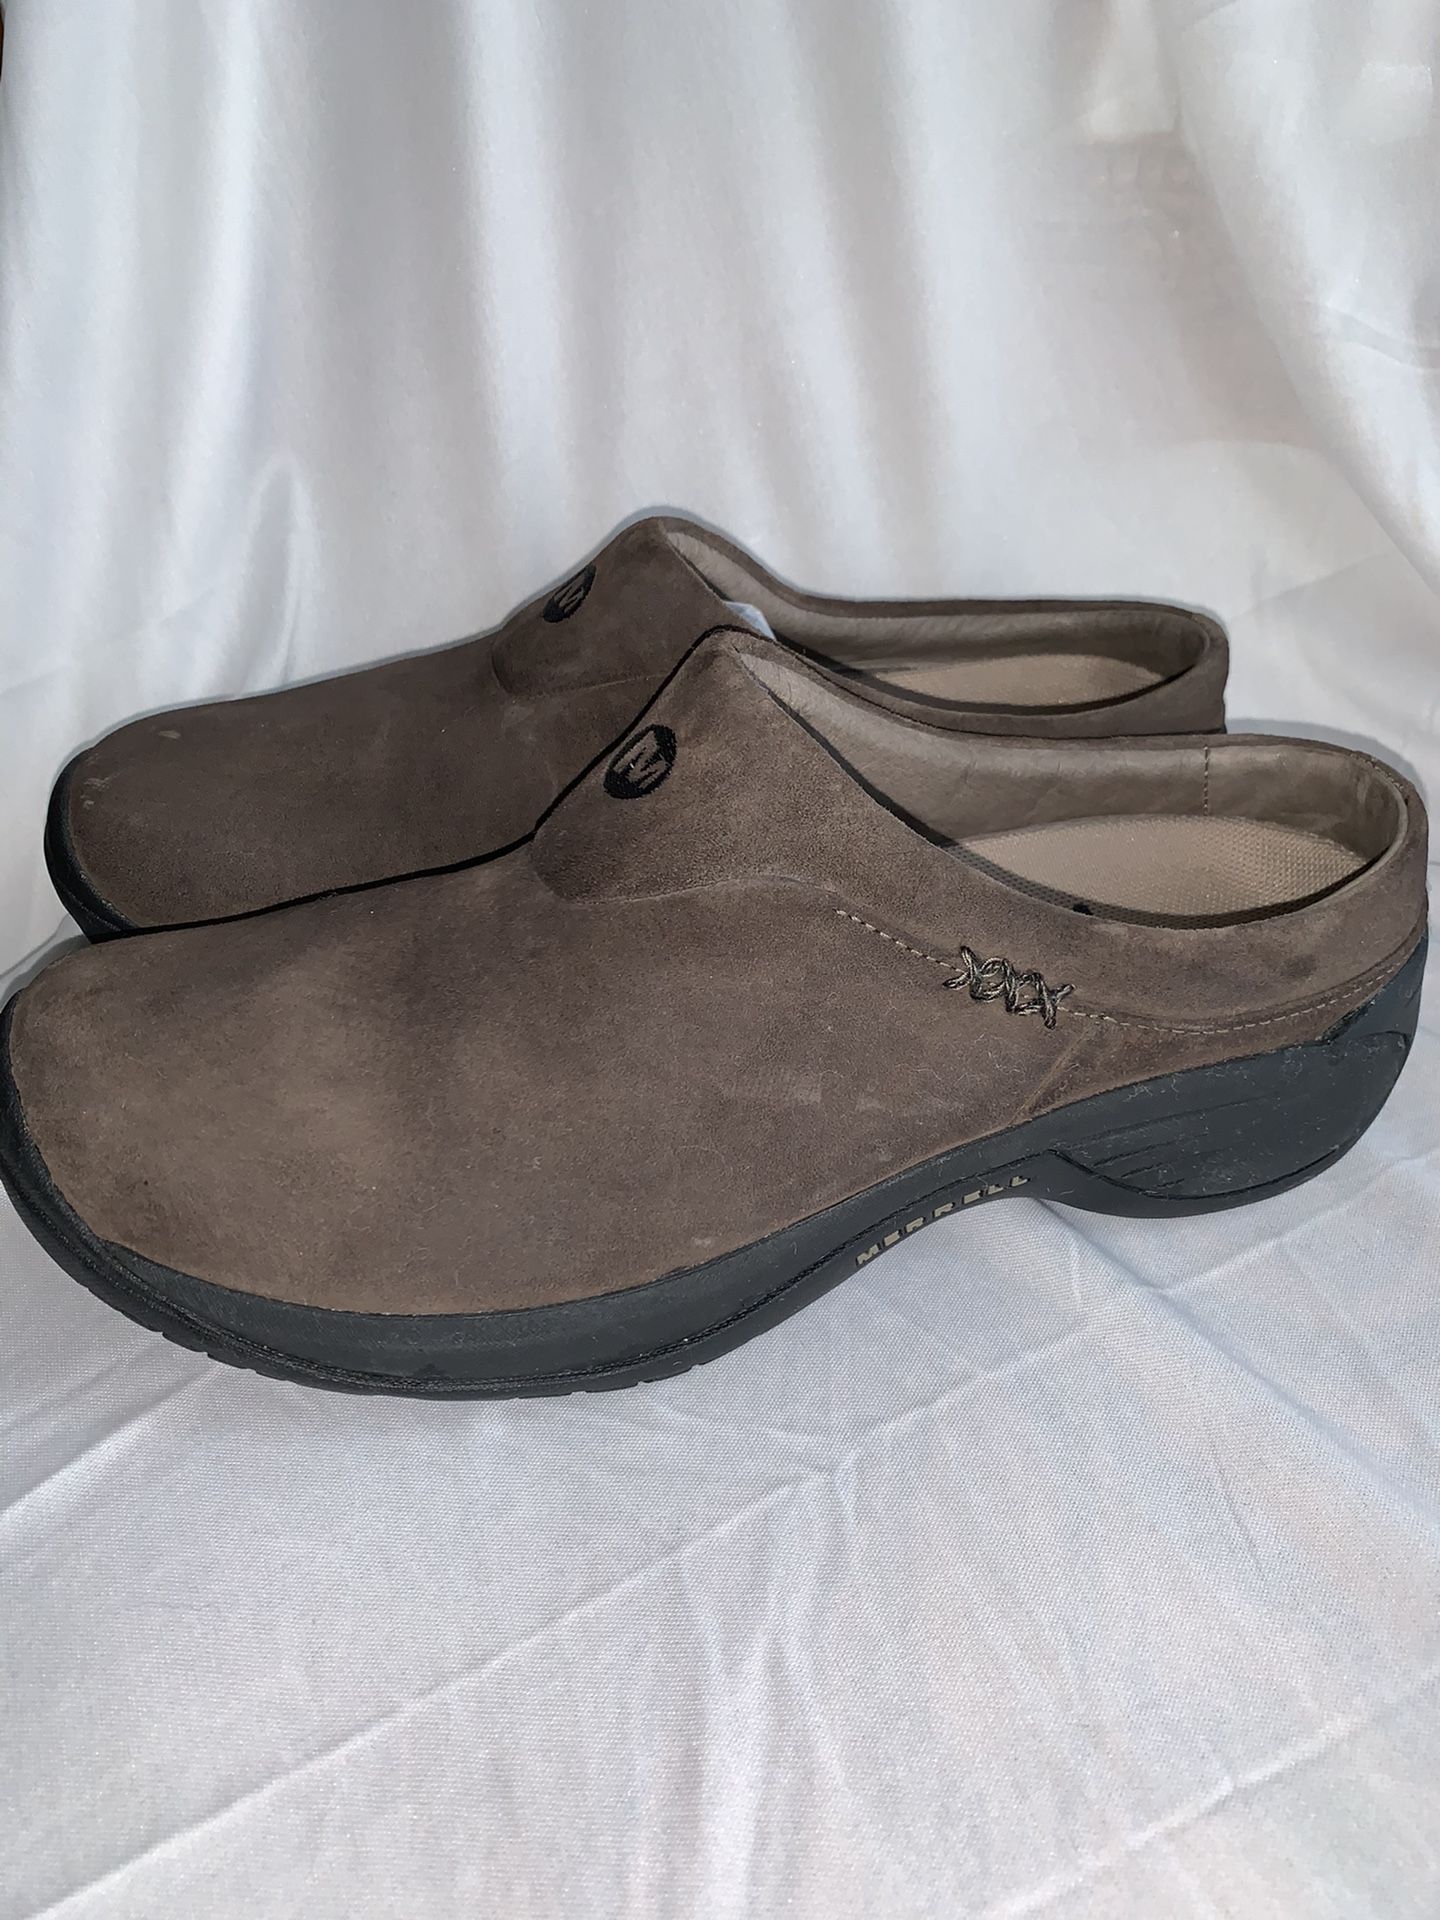 New Women’s Merrell Free Stone Encore Shoes SIZE 9.5 M